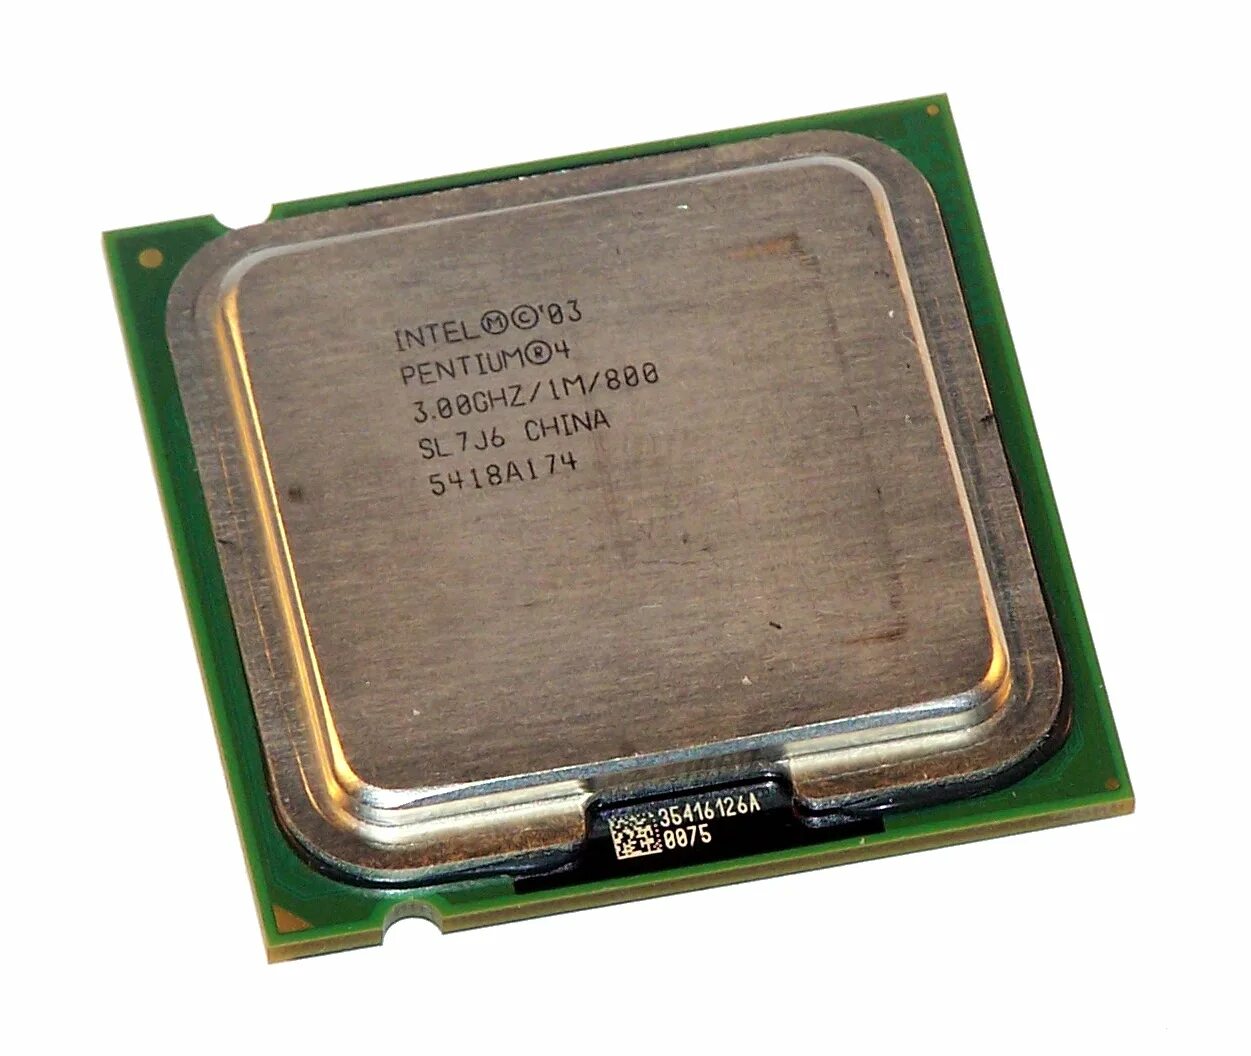 Процессор Intel 04 Pentium 4. Intel 04 Pentium 4 3.00GHZ/1m/800/04a. Процессор Intel Pentium 4 3400mhz Prescott. Intel Pentium 4 2.0 GHZ.